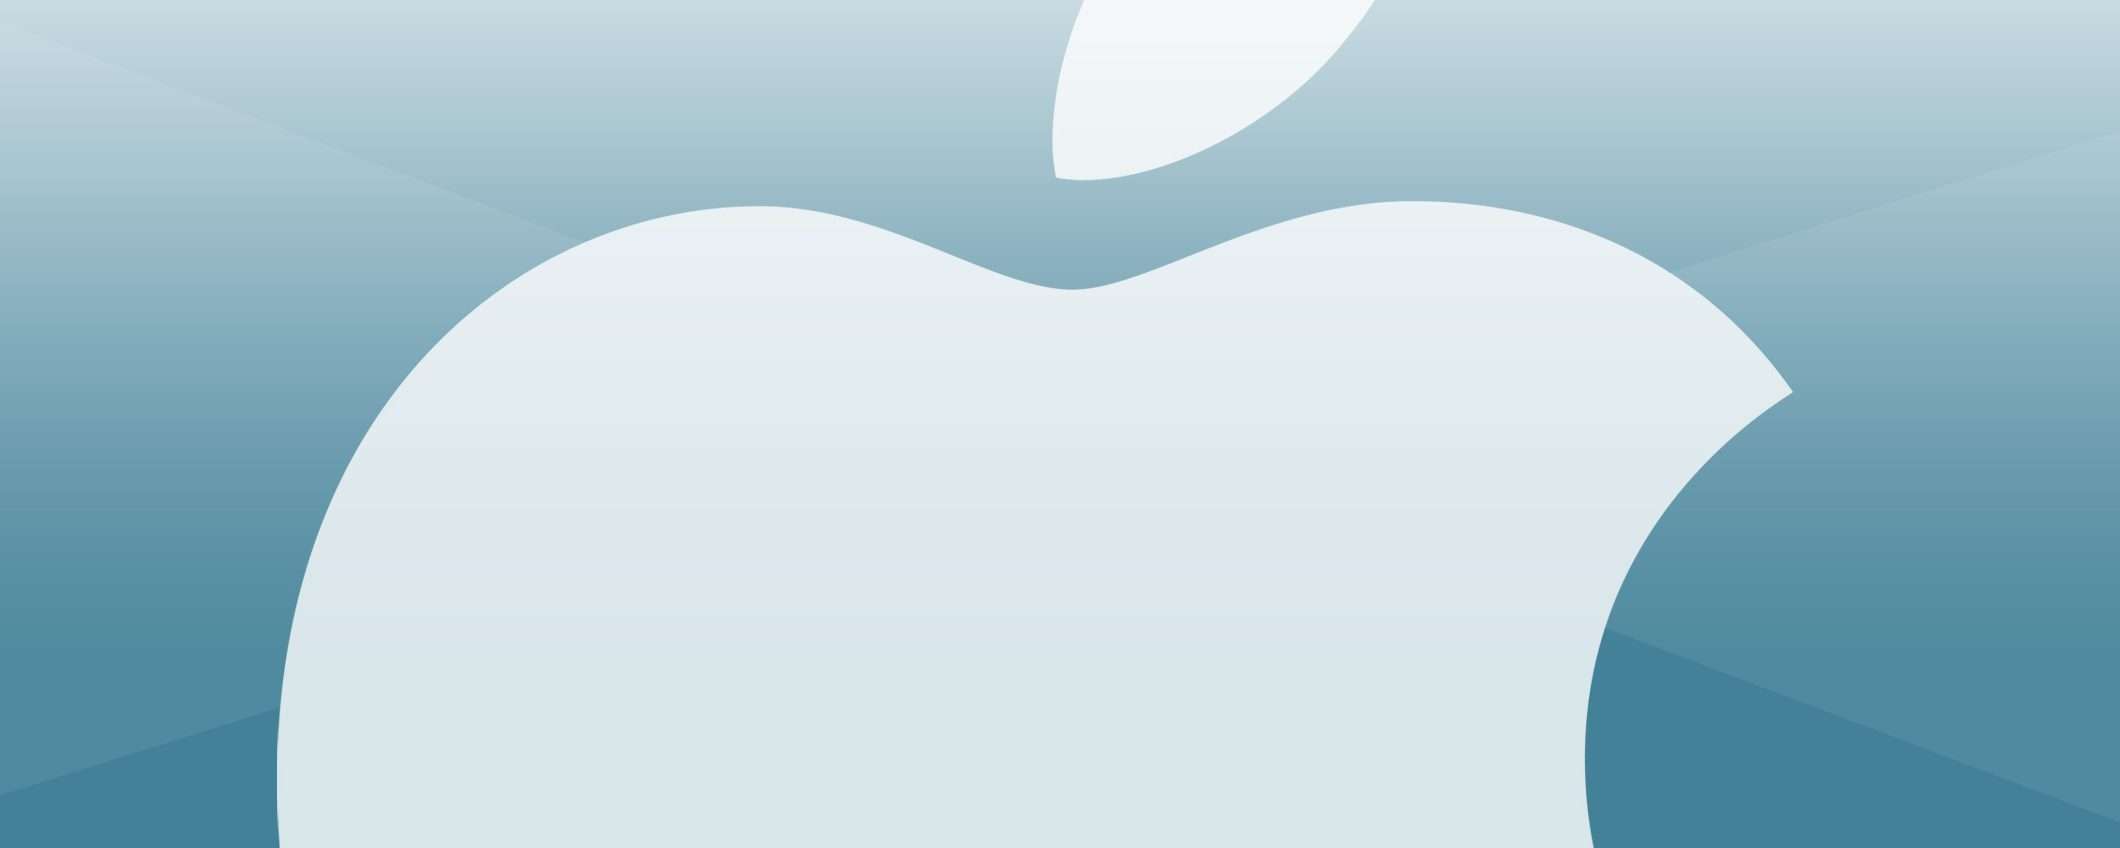 iOS 16.4: Apple sta lavorando a ComputeModule